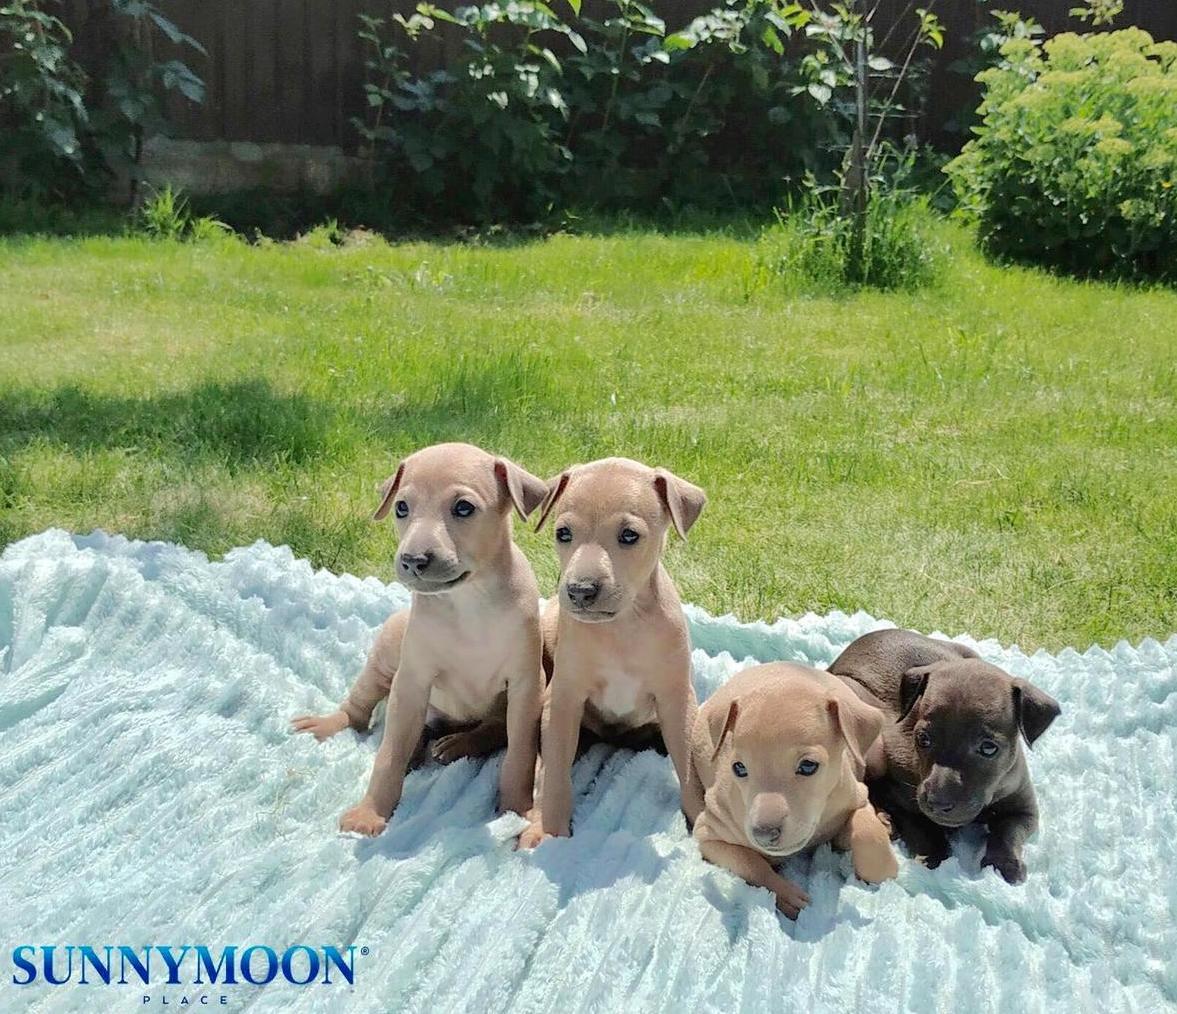 Buy Italian Greyhound puppy / Купить щенка левретки. Киев. Украина